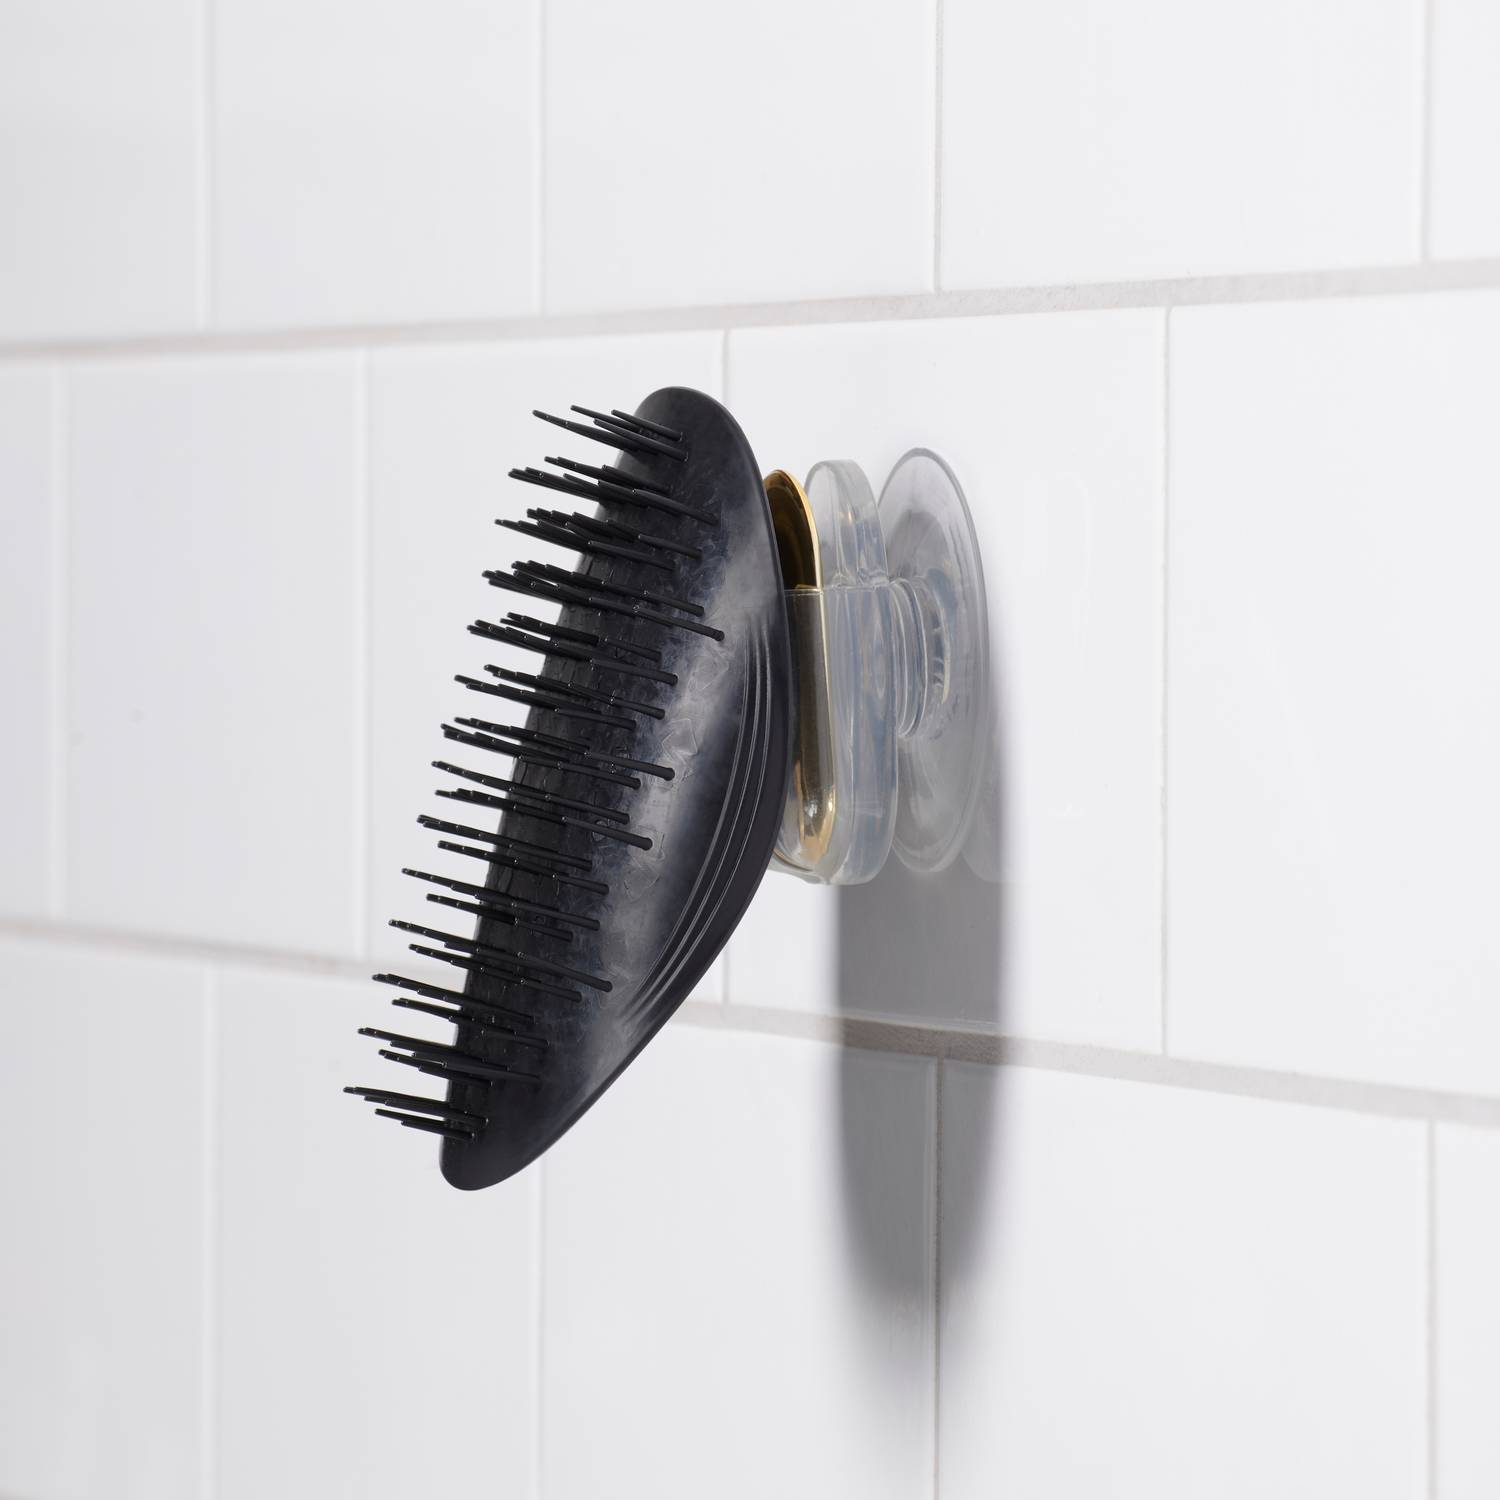 Manta shower holder on bathroom wall